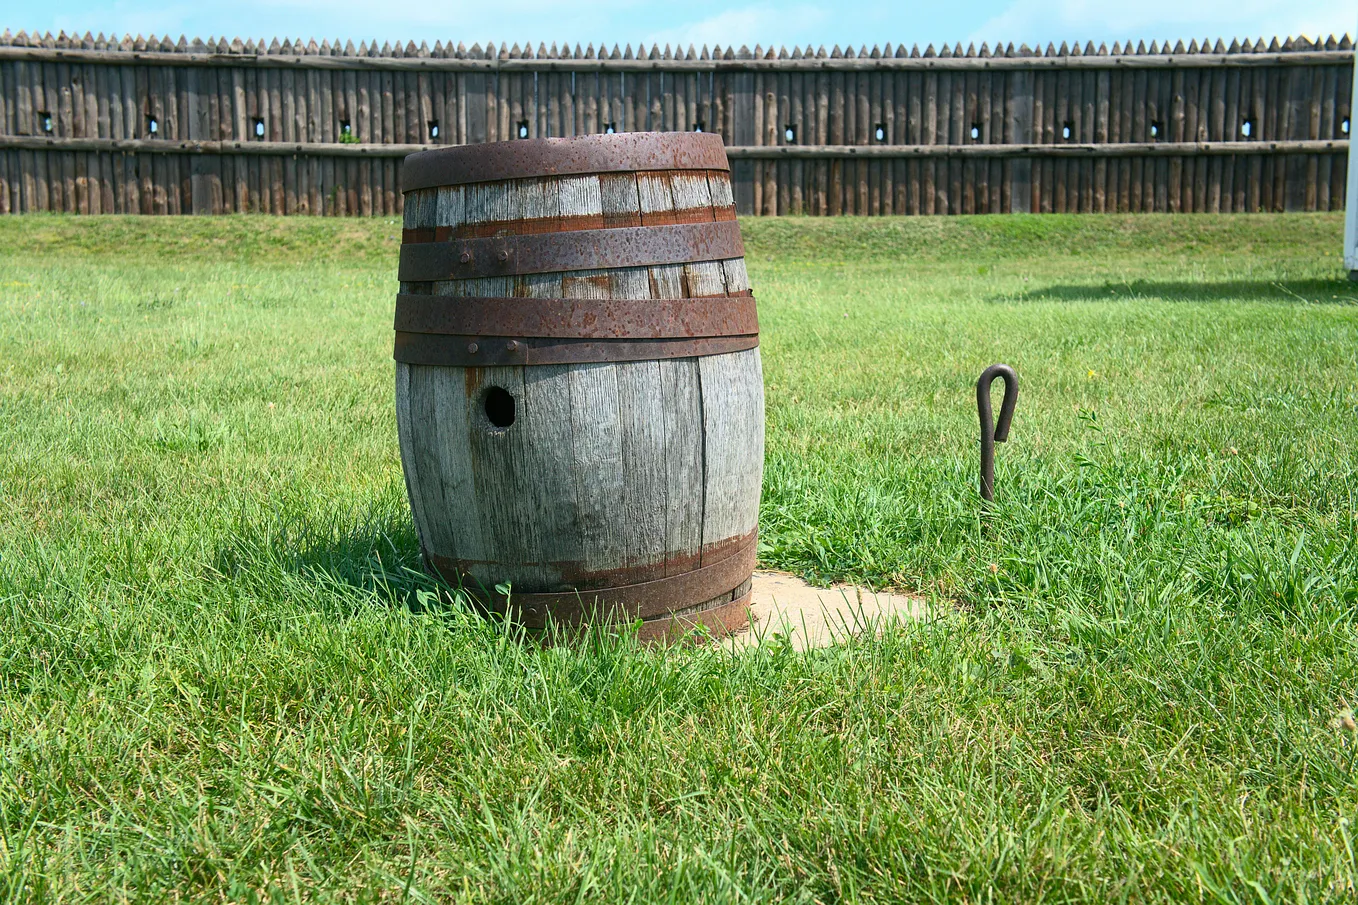 An rusty antique barrel sits on a lawn.